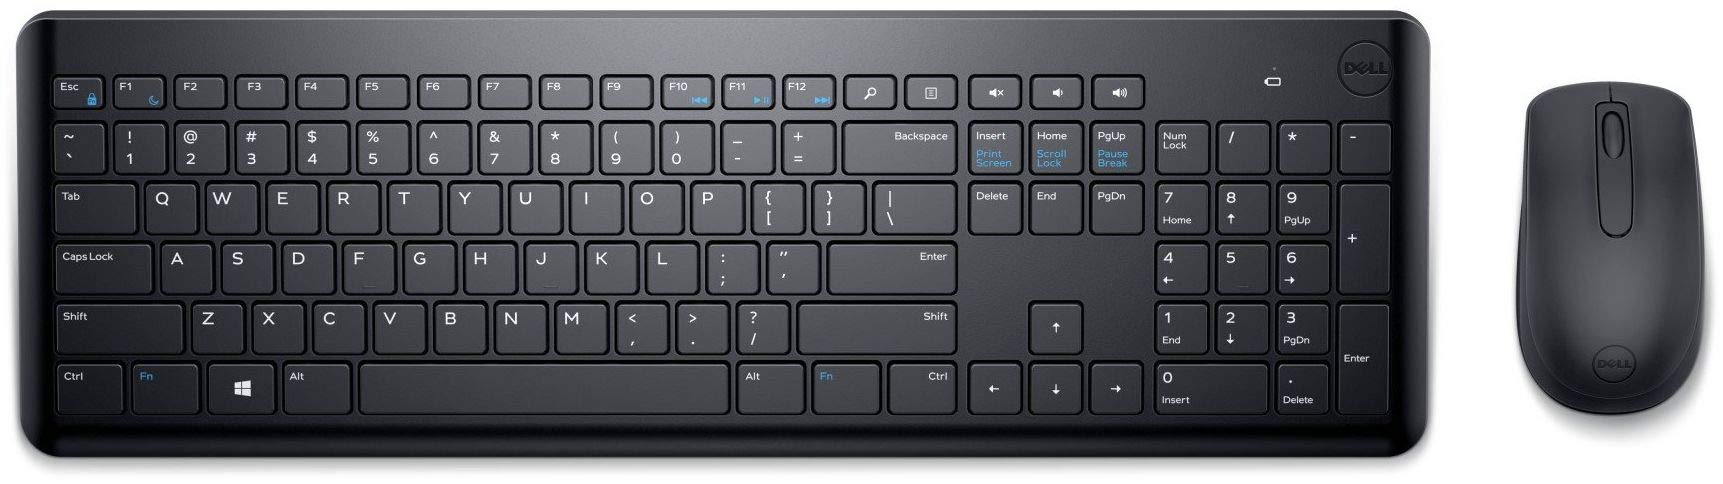 خرید Dell KM117 Wireless Keyboard and Mouse